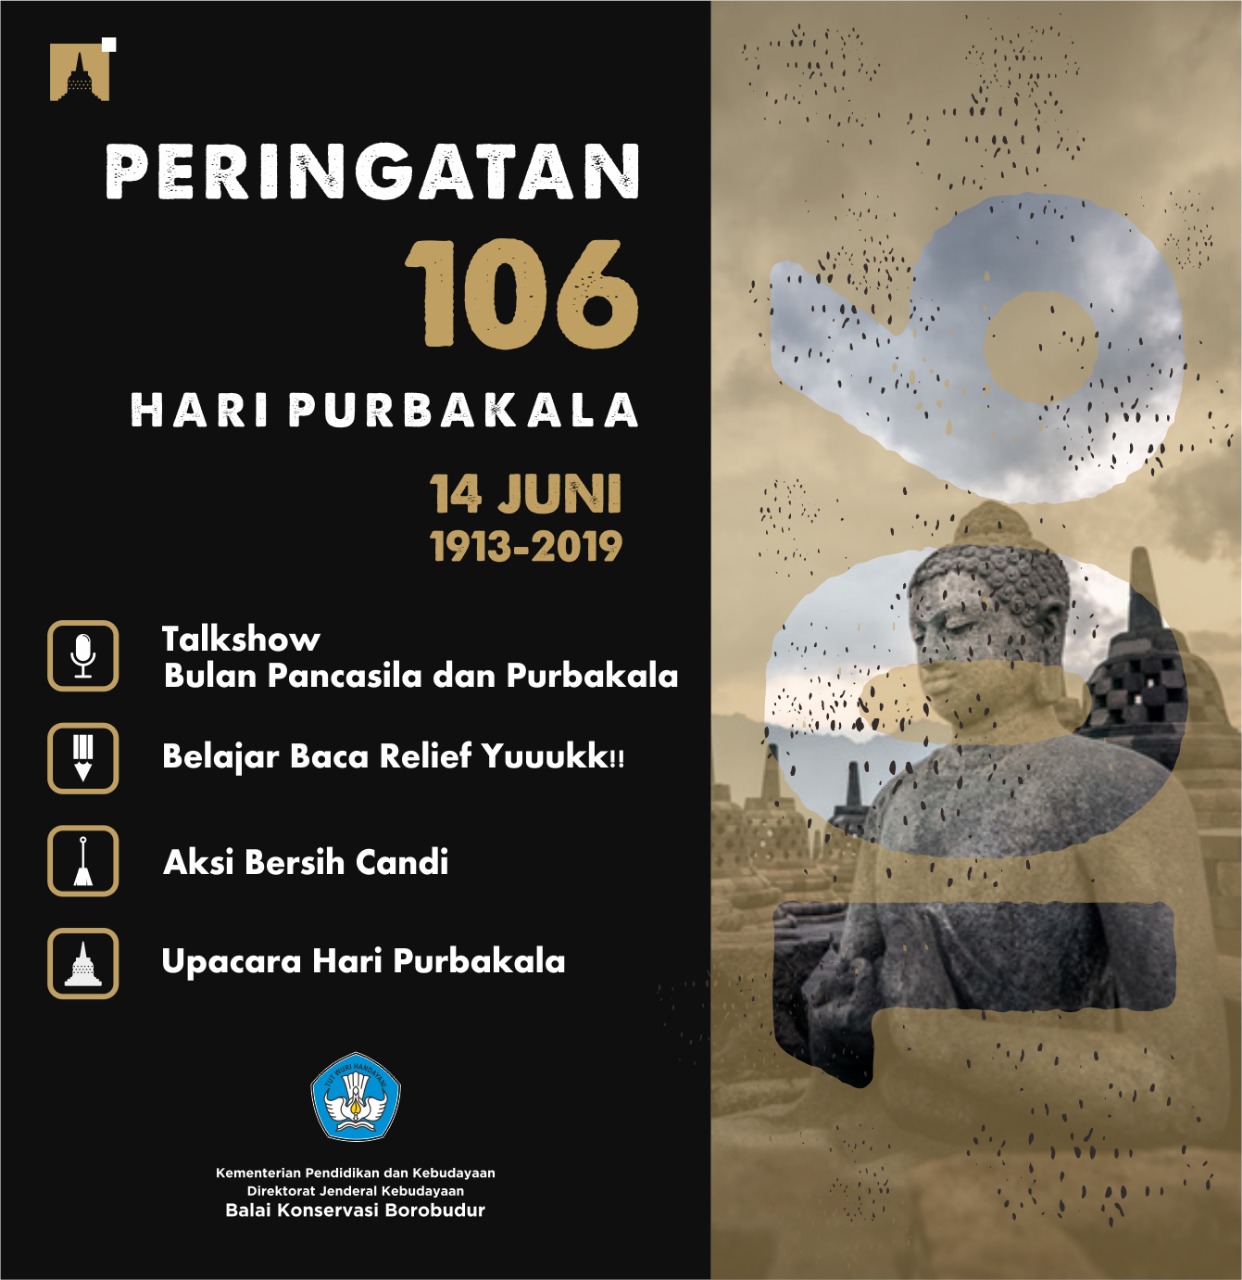 You are currently viewing Peringatan Hari Purbakala 2019 Balai Konservasi Borobudur